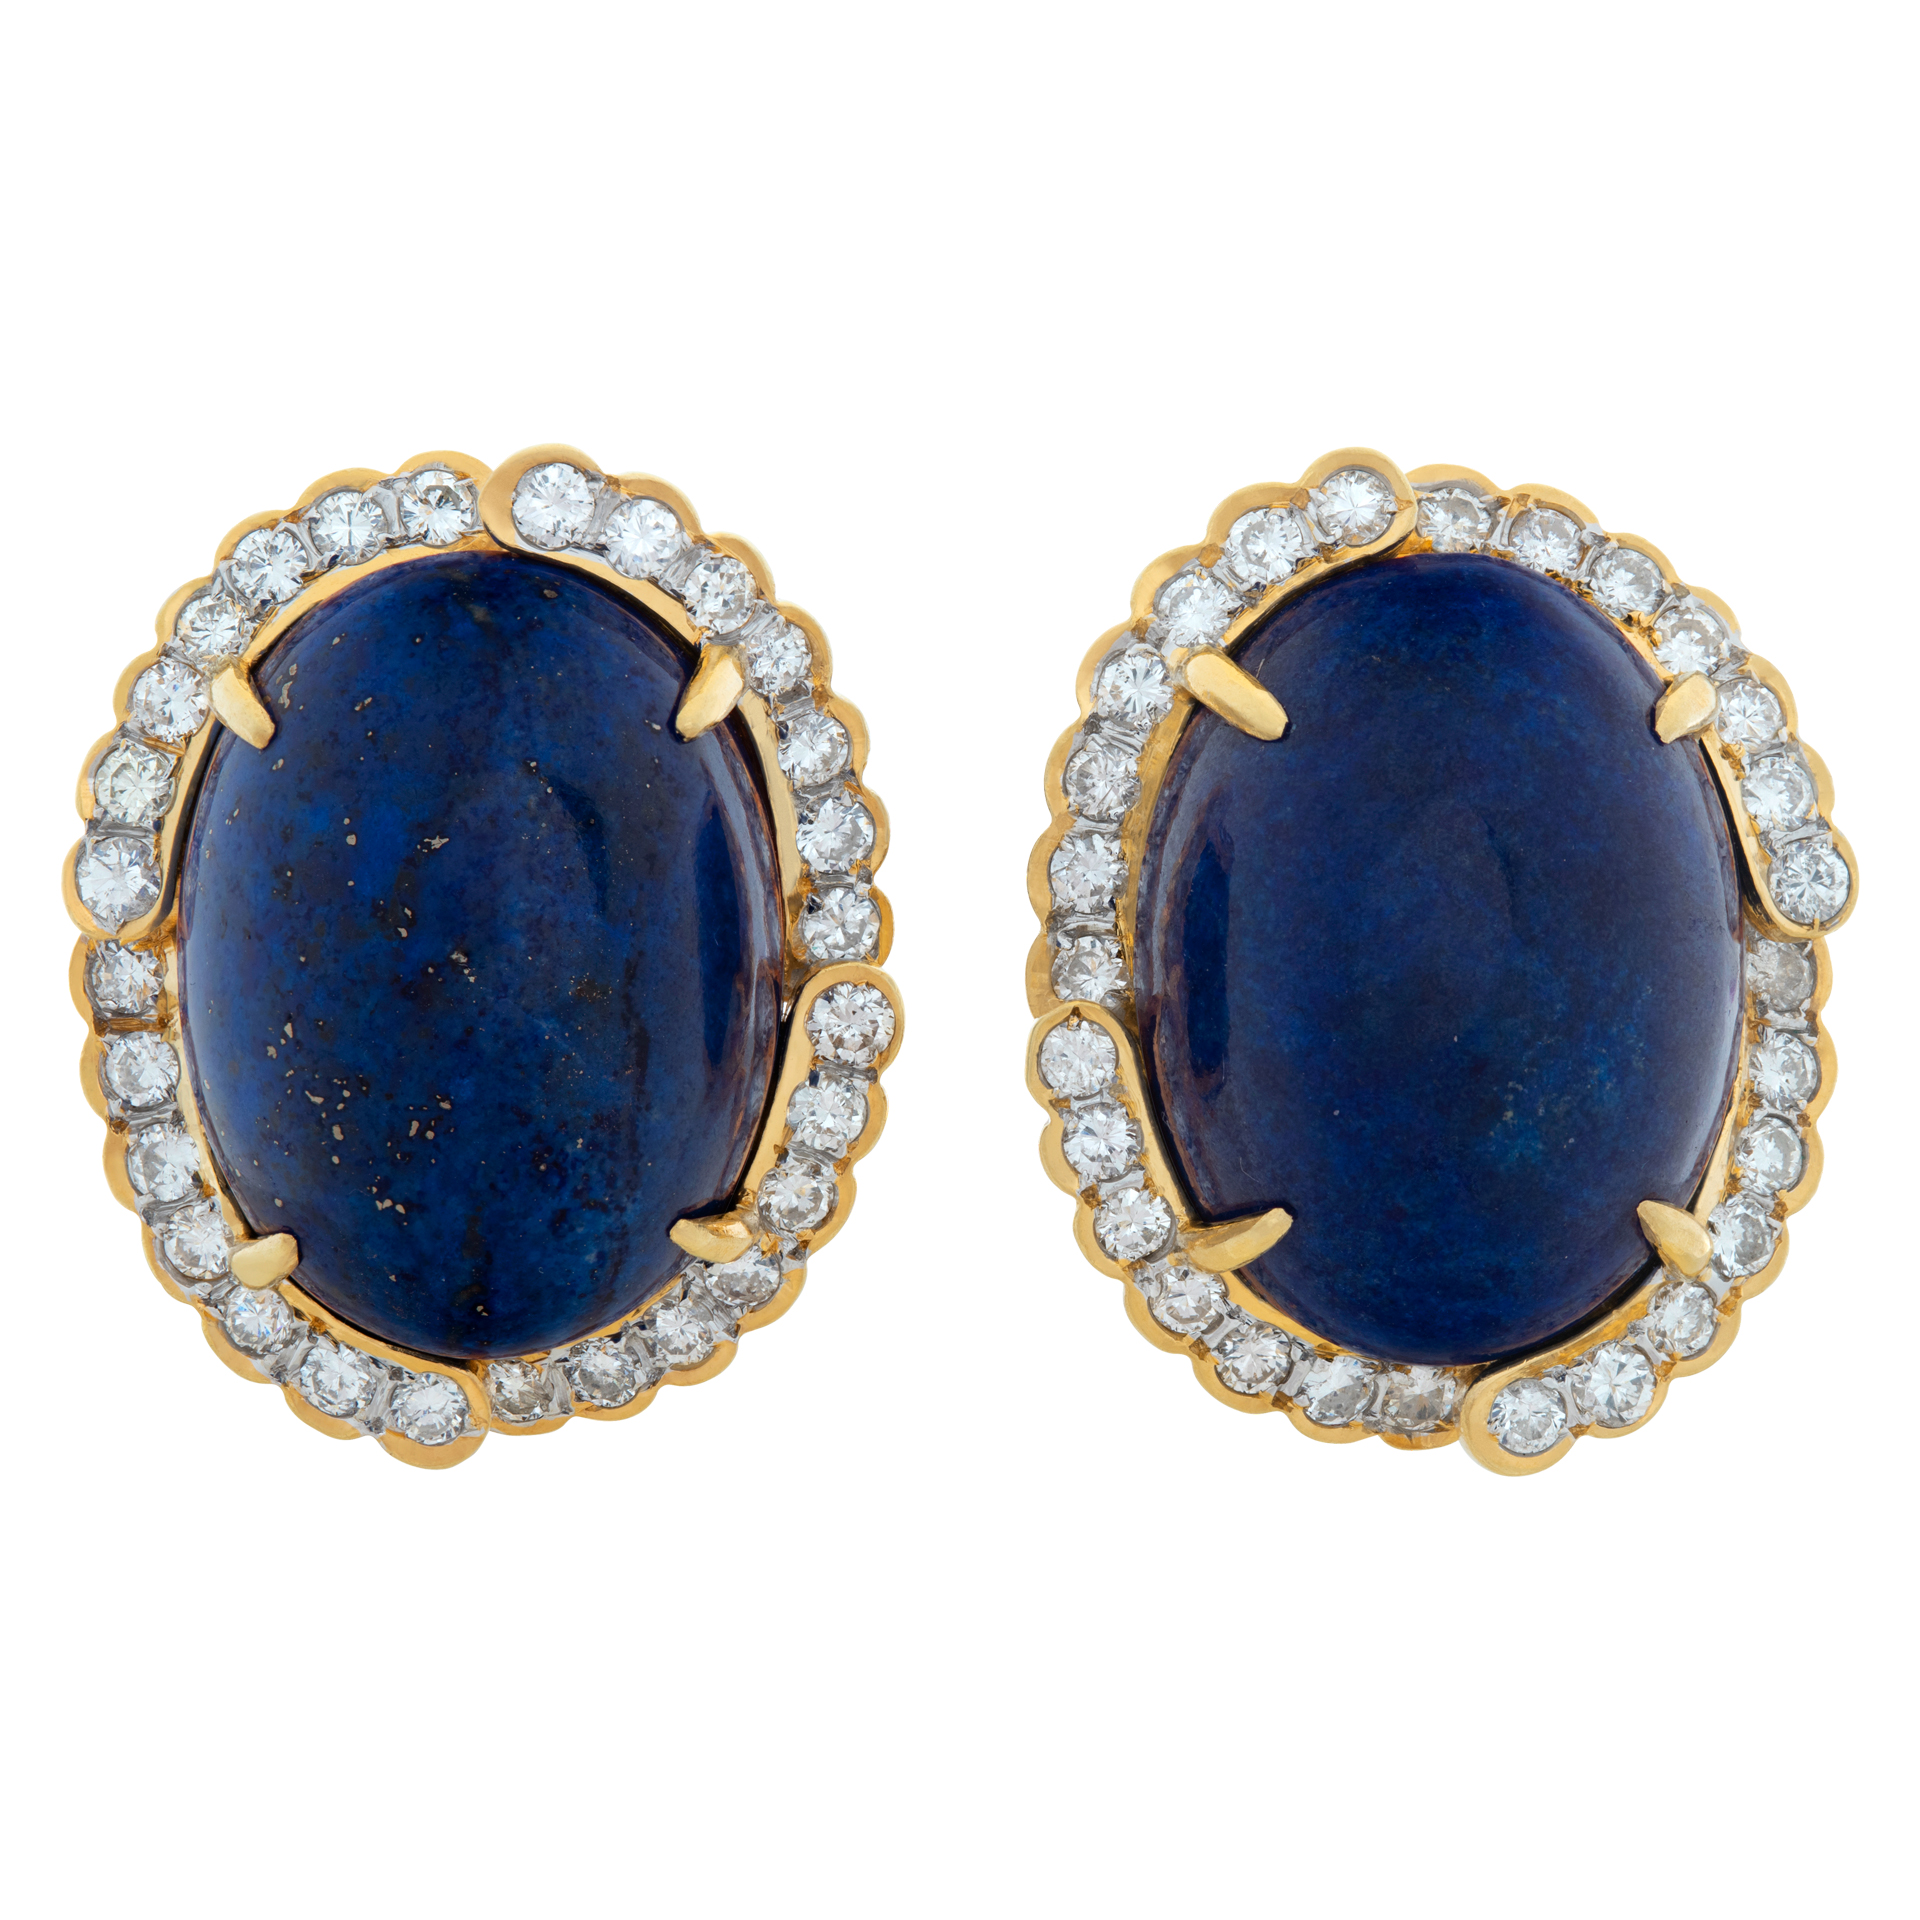 Large oval cabochon lapis lazuli & diamonds earrings set in 18K yellow gold.